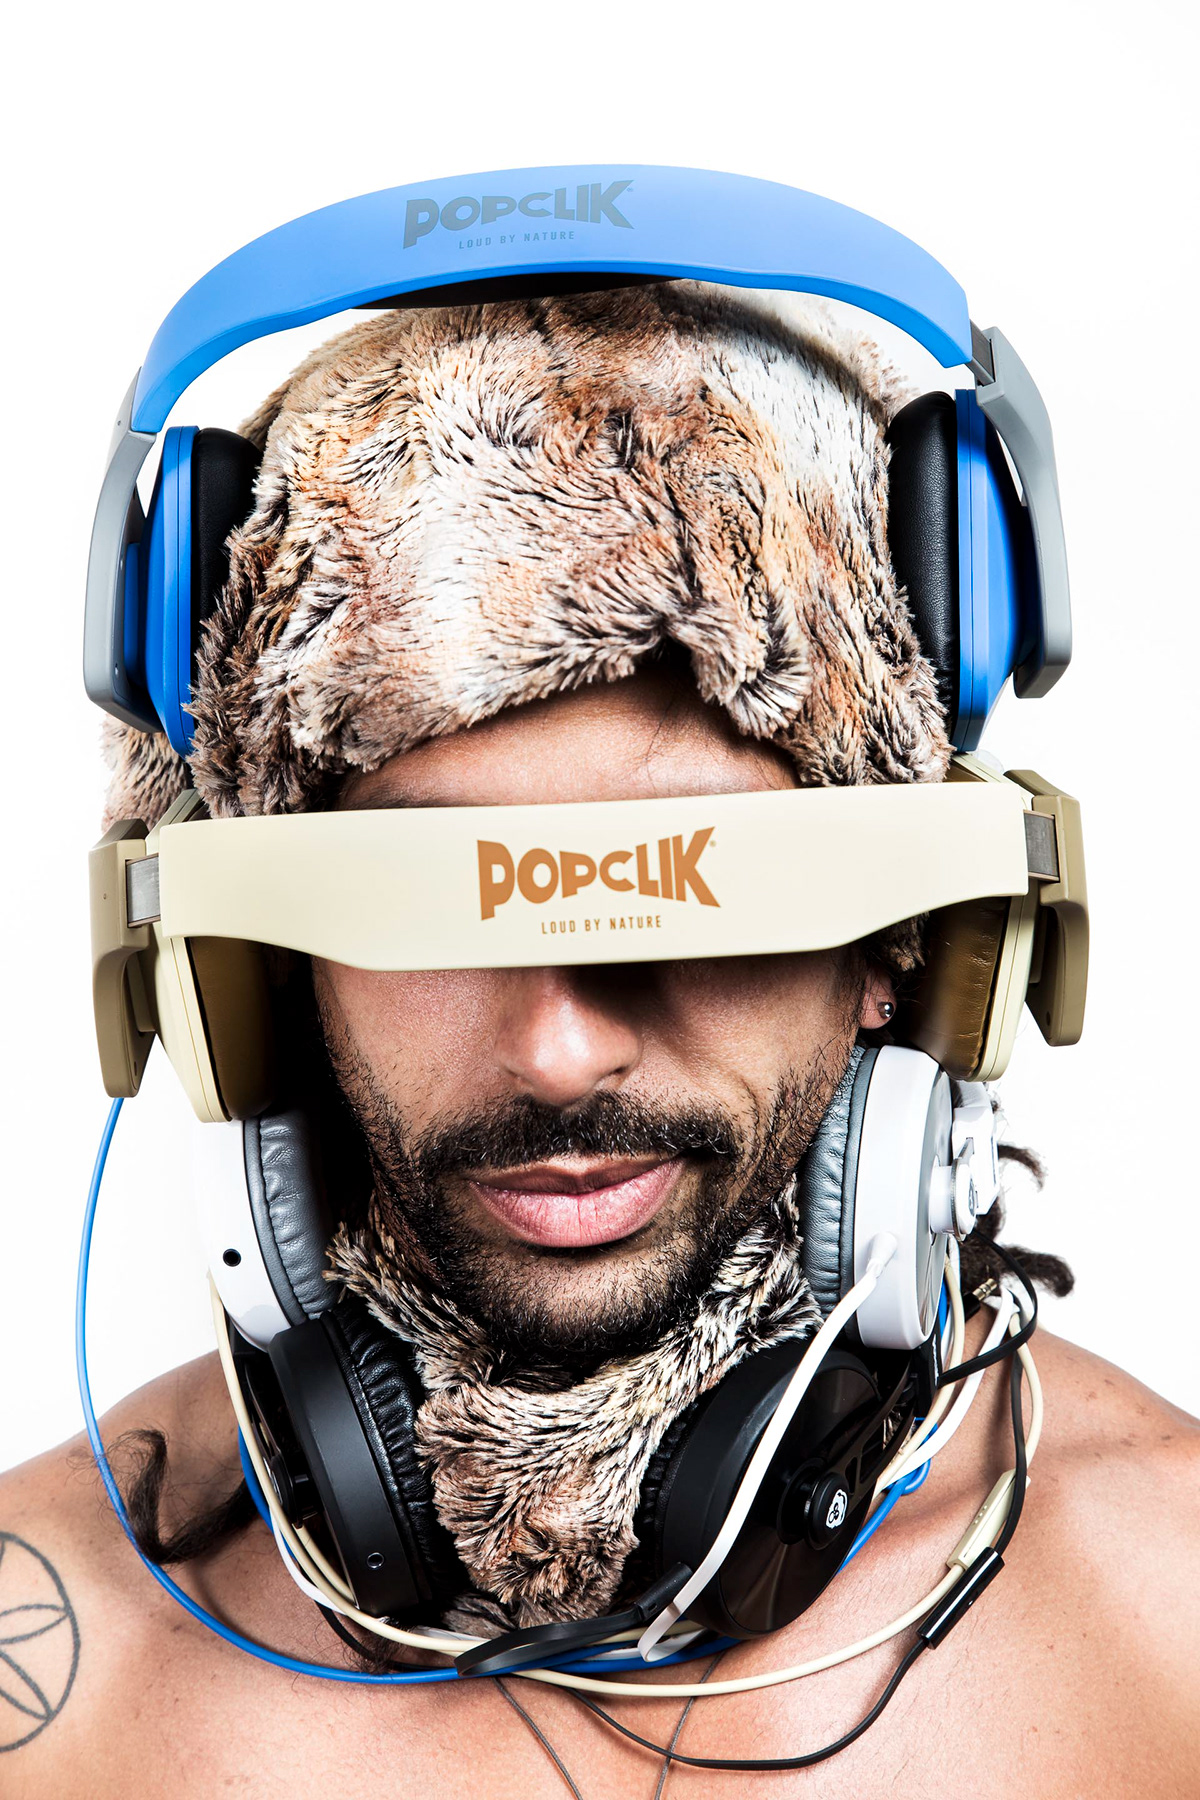 ephcto Popclik headphones Musicartist art creative concept lifestyle Fun loud